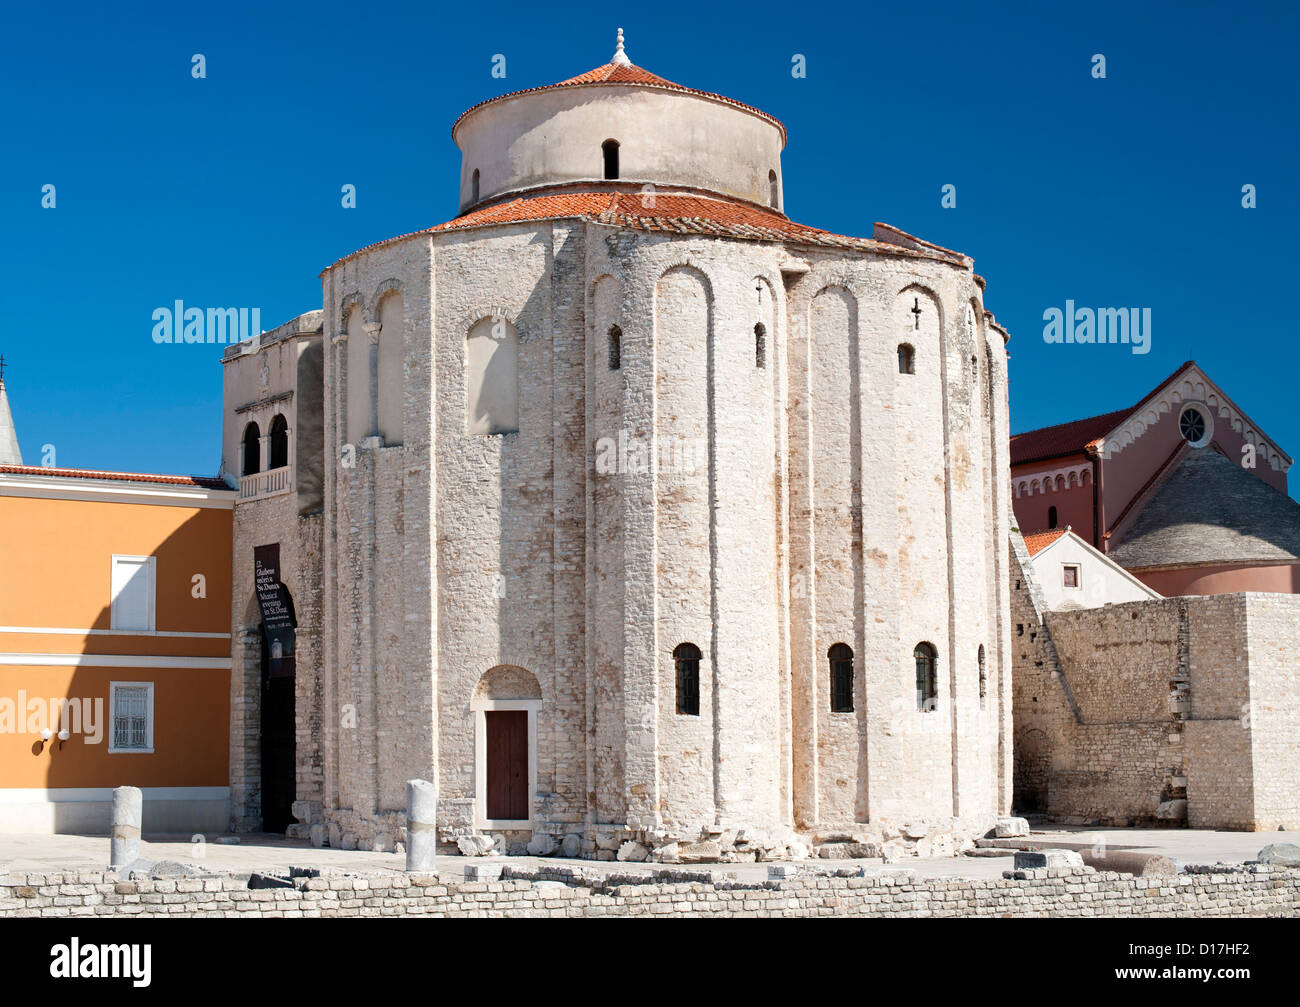 The church of St Donat in Zadar on the Adriatic coast of Croatia. Stock Photo